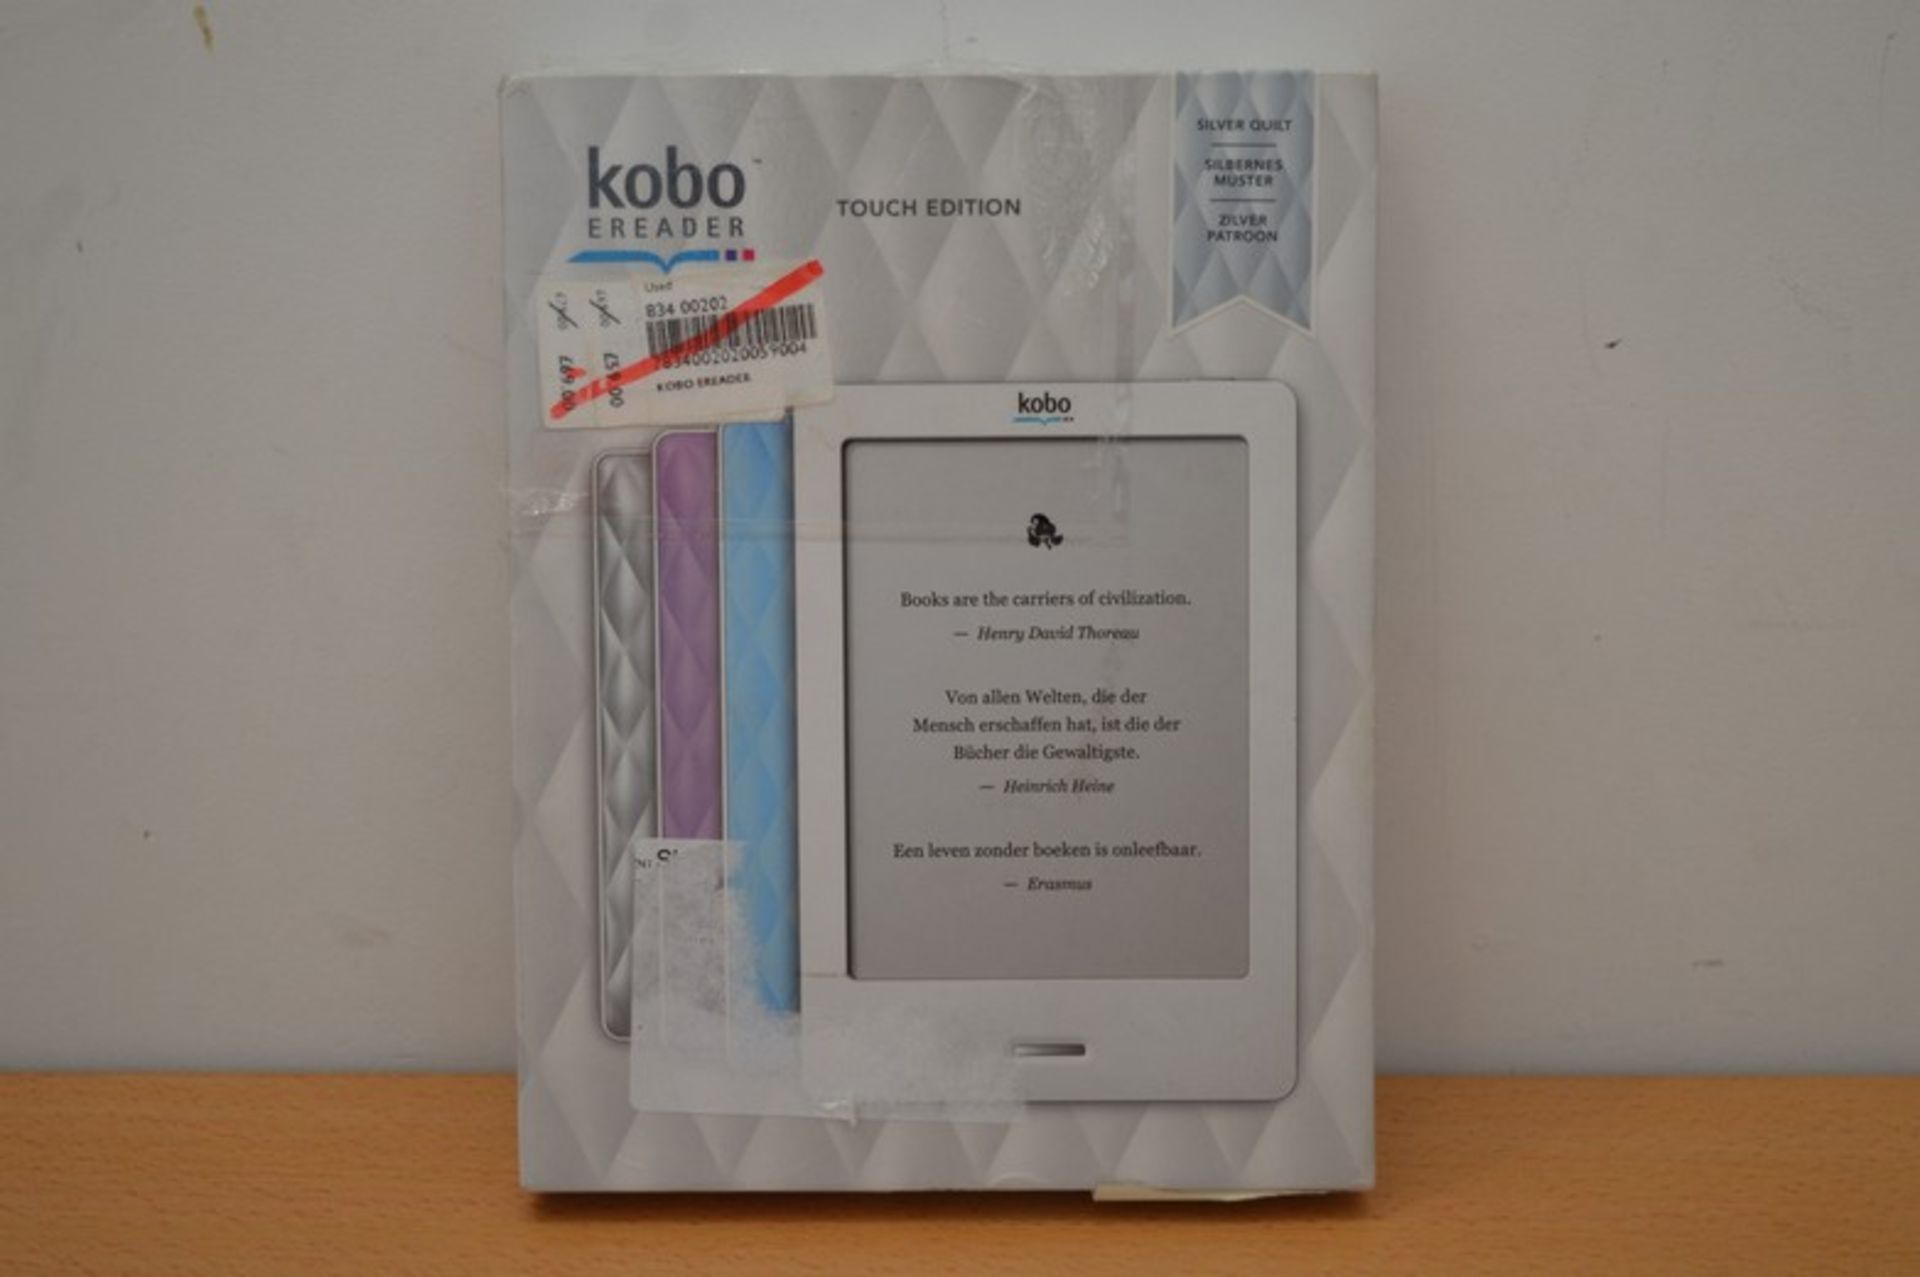 BOXED KOBO EREADER PORTABLE TUCH EDITION BOOK (DSCLIP)(20.05.15)